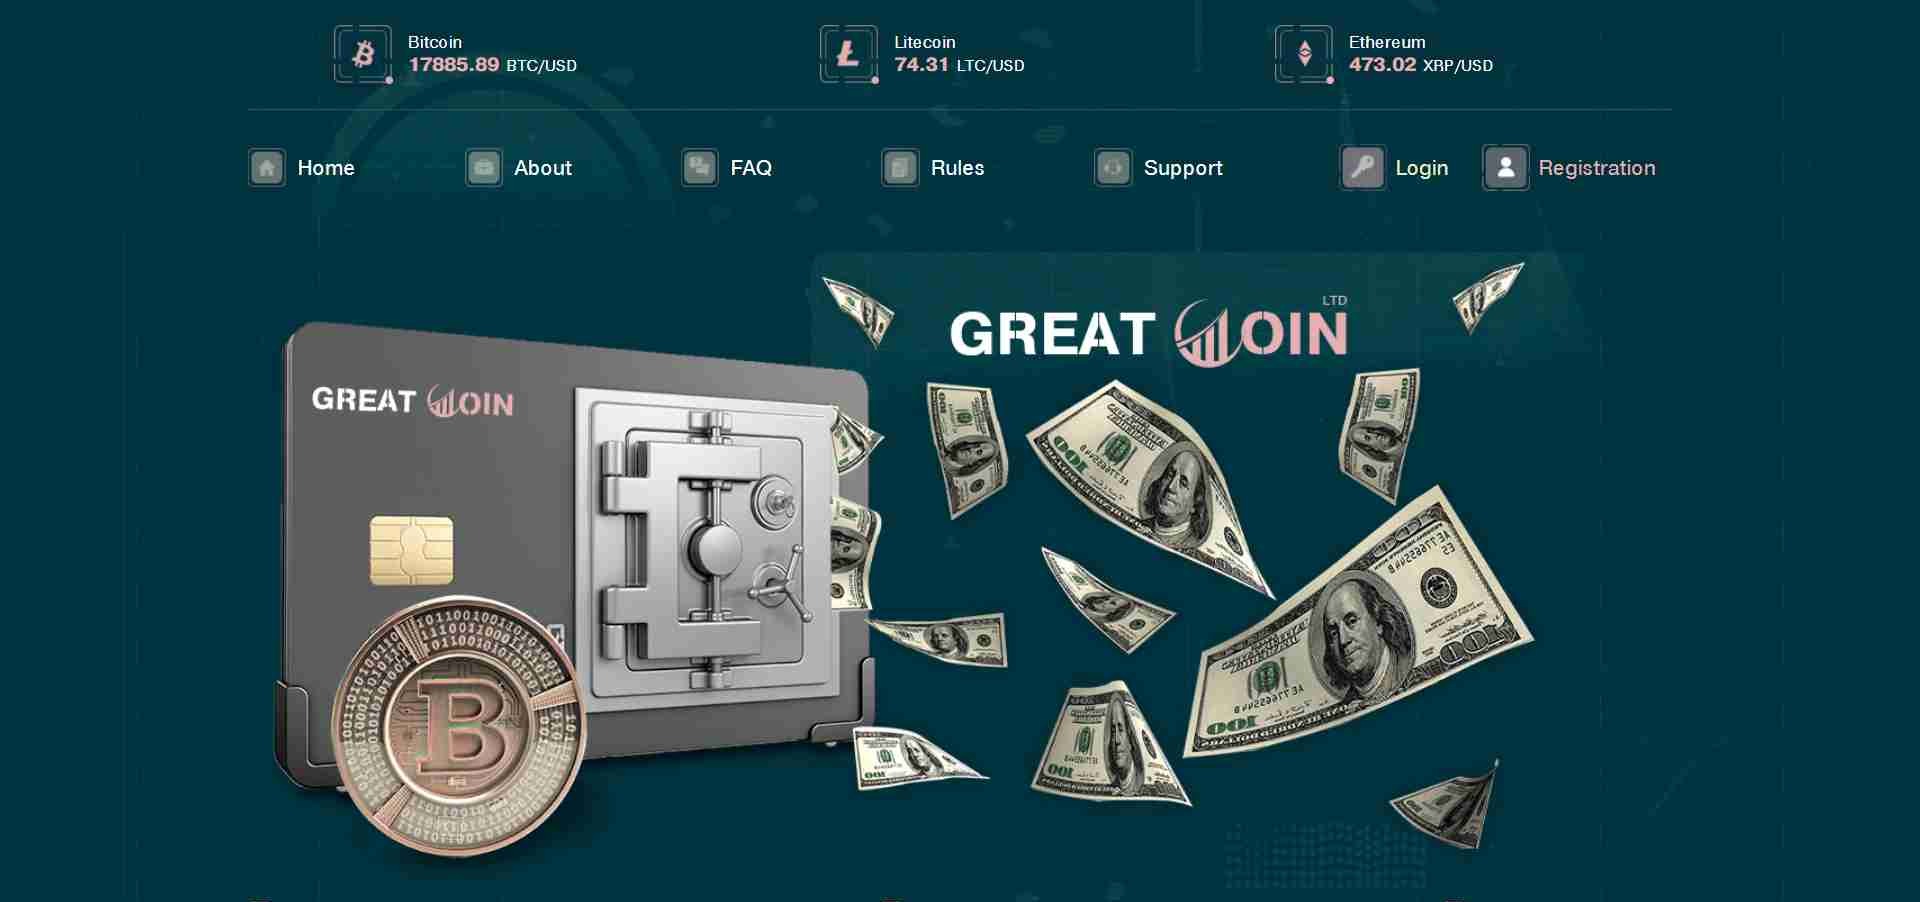 Great Coin Ltd